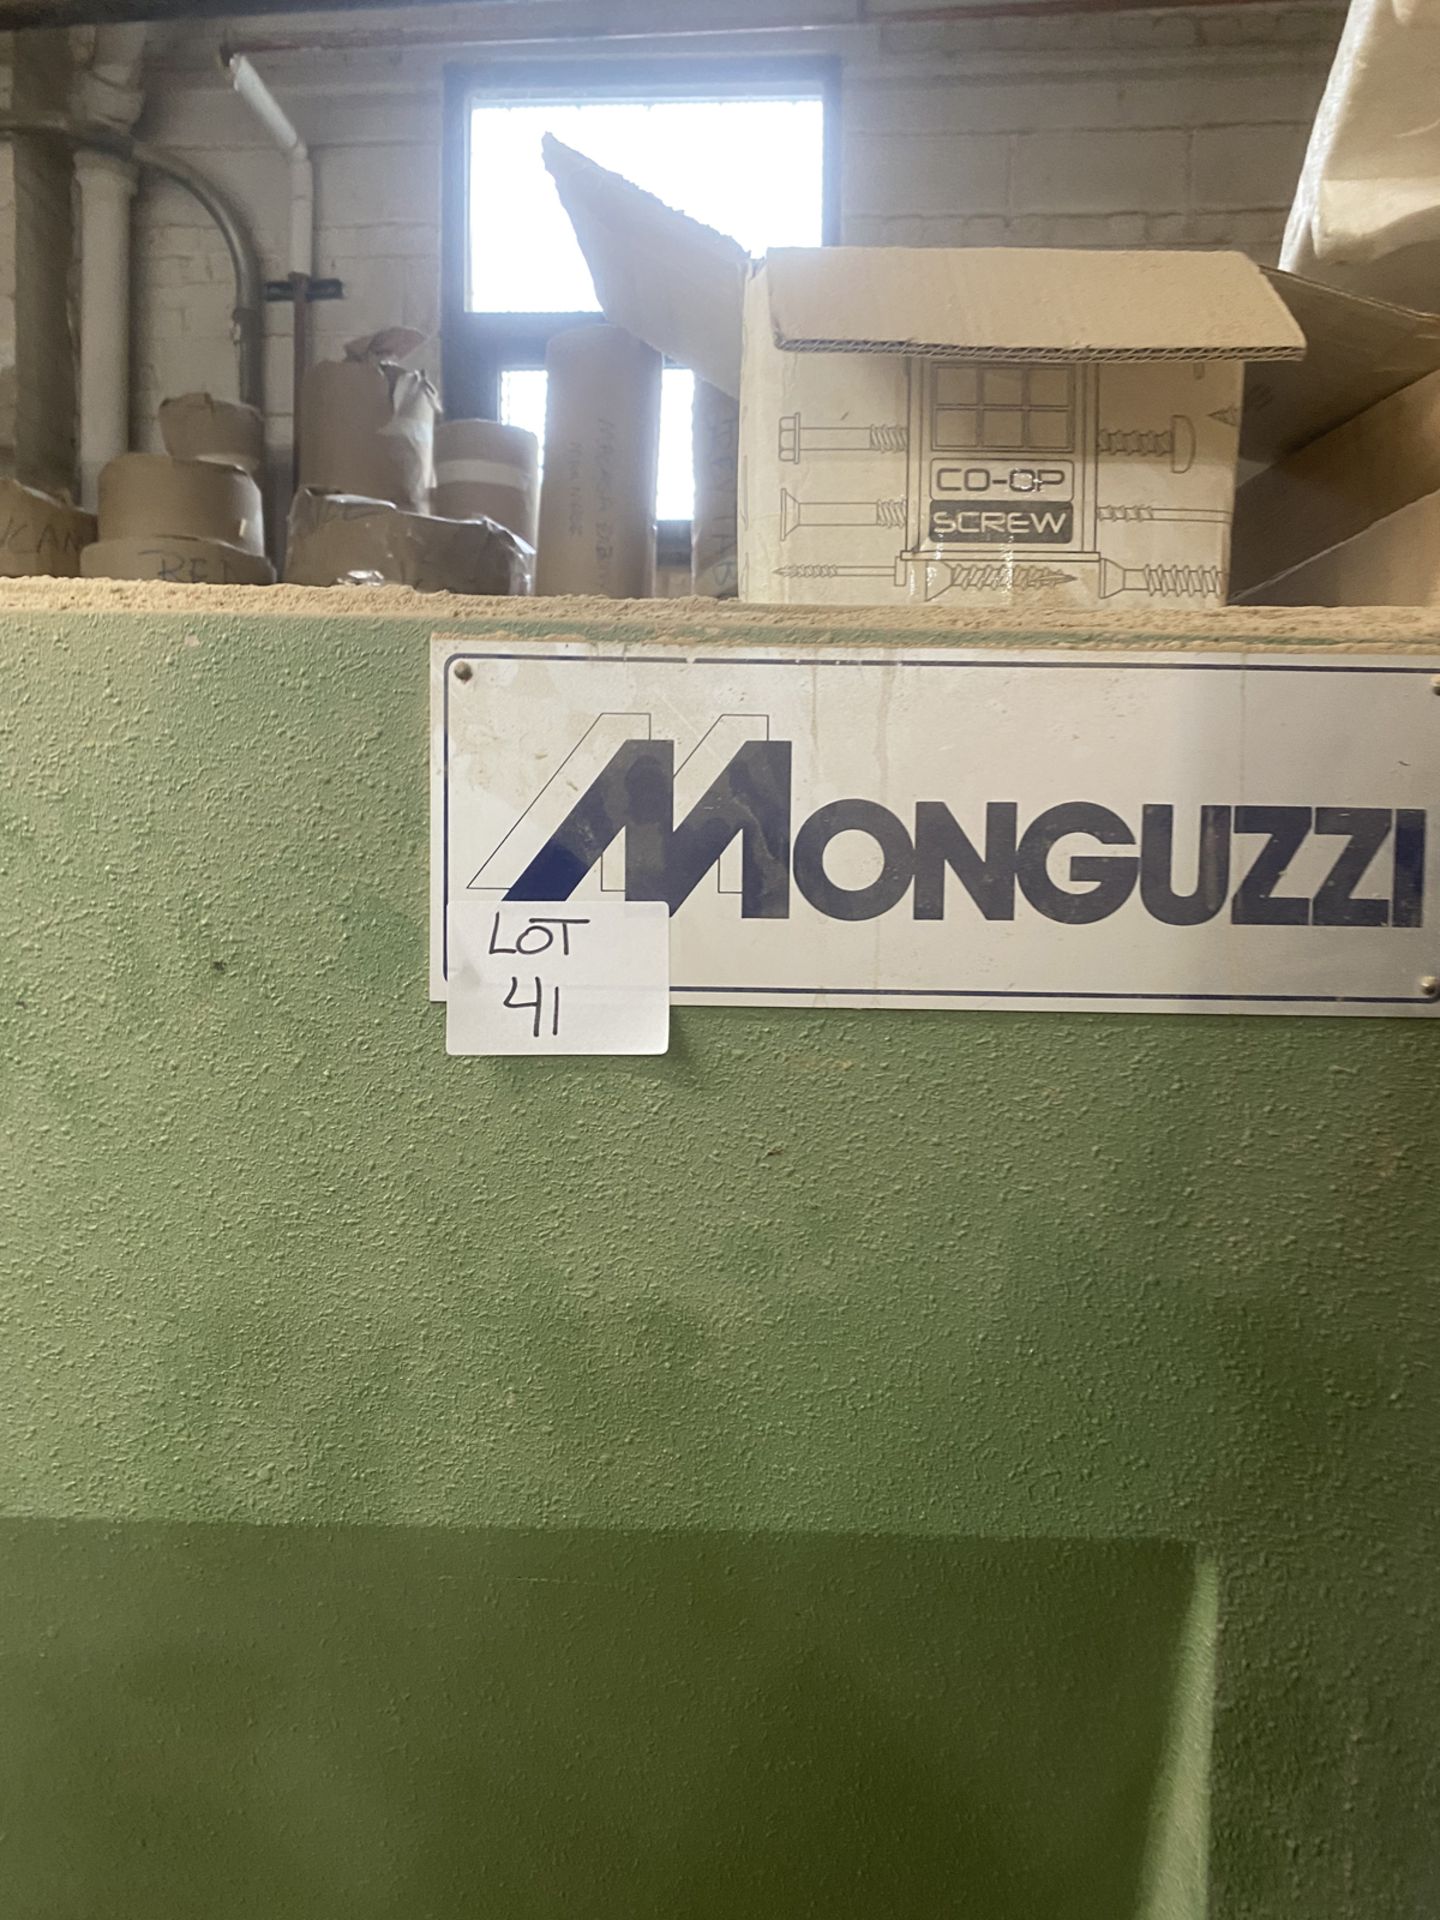 Monguzzi 161" Guillotine - Image 6 of 7